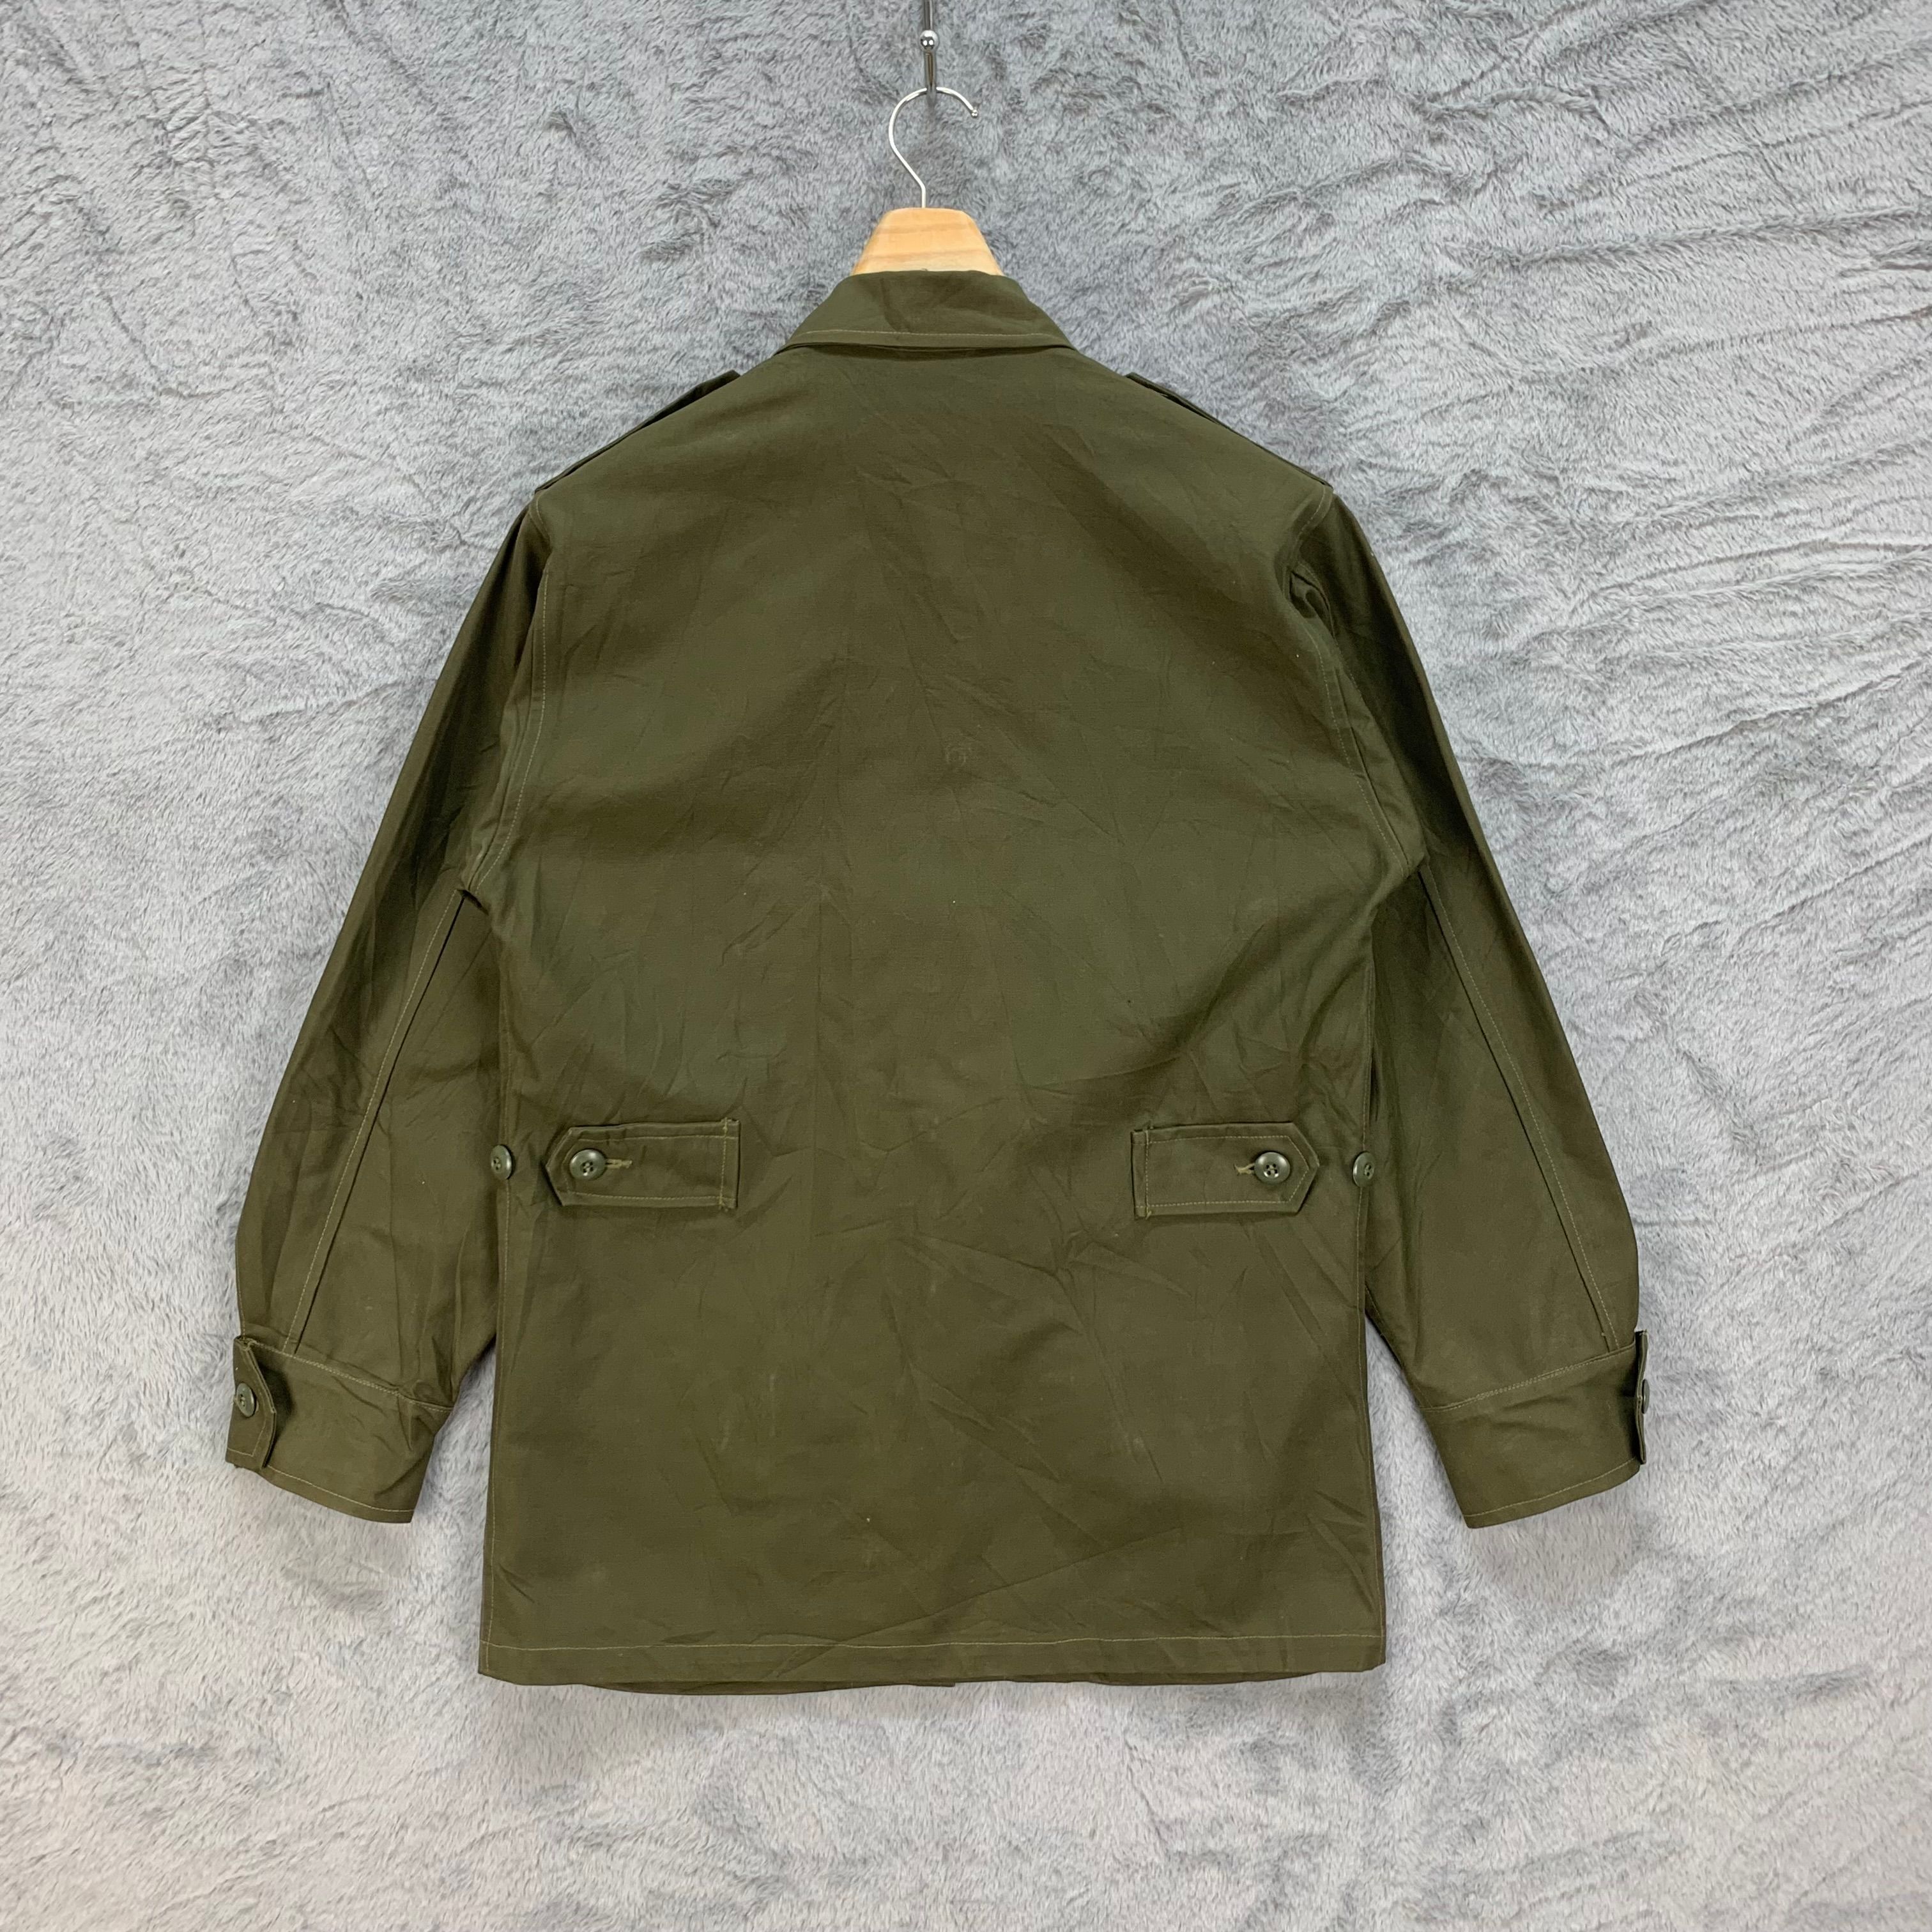 Vintage - Army Uniform Military Field Jacket / Chore Jacket #4400-152 - 9